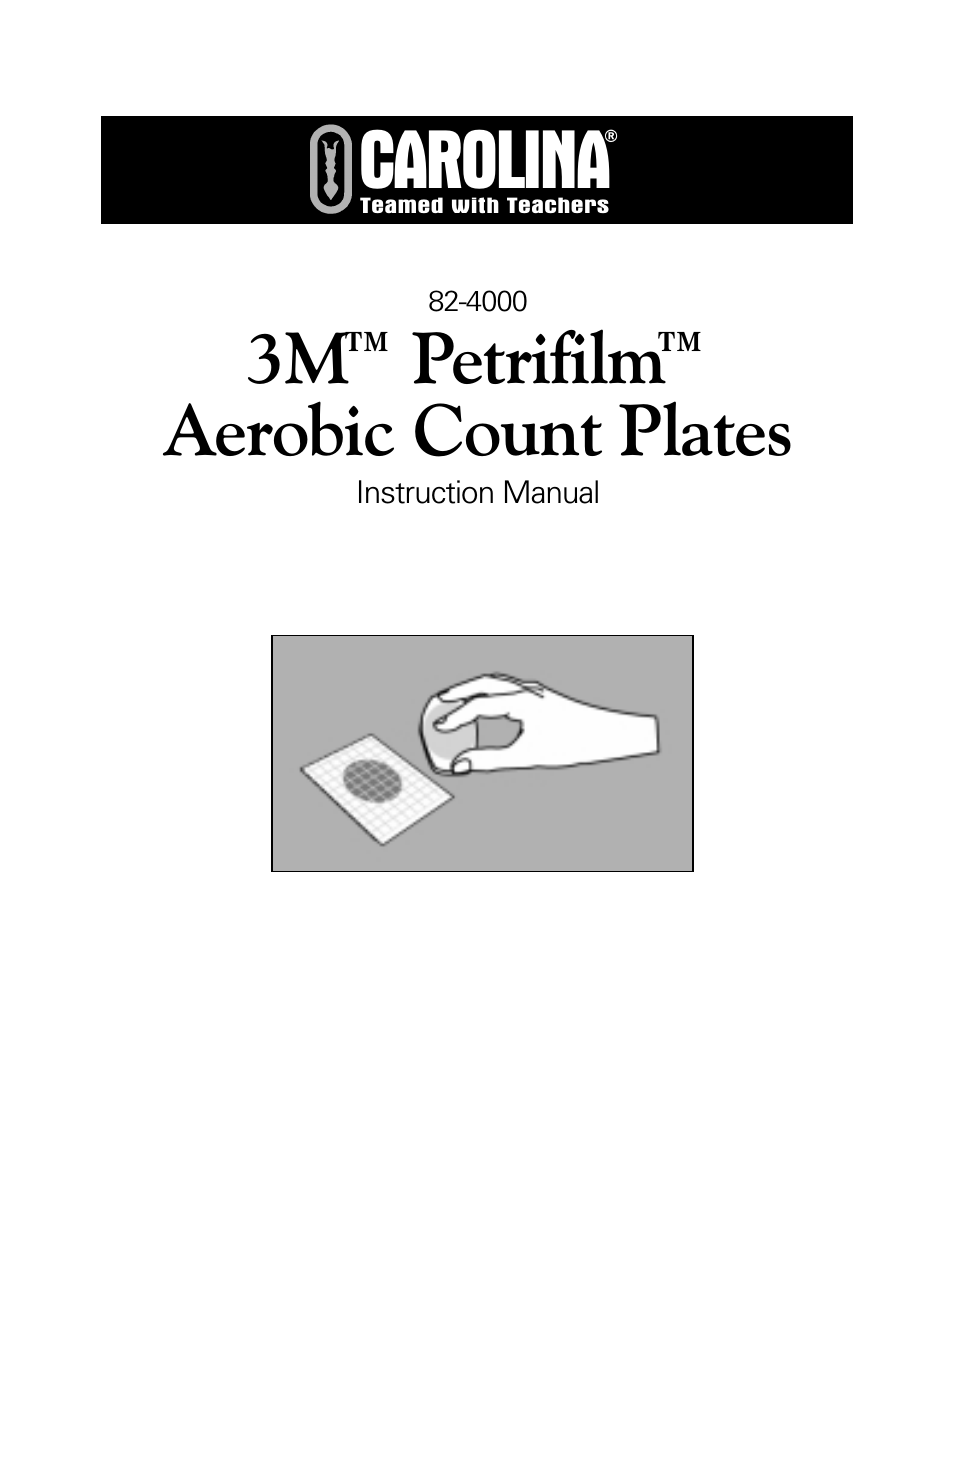 3M Petrifilm Aerobic Count Plates